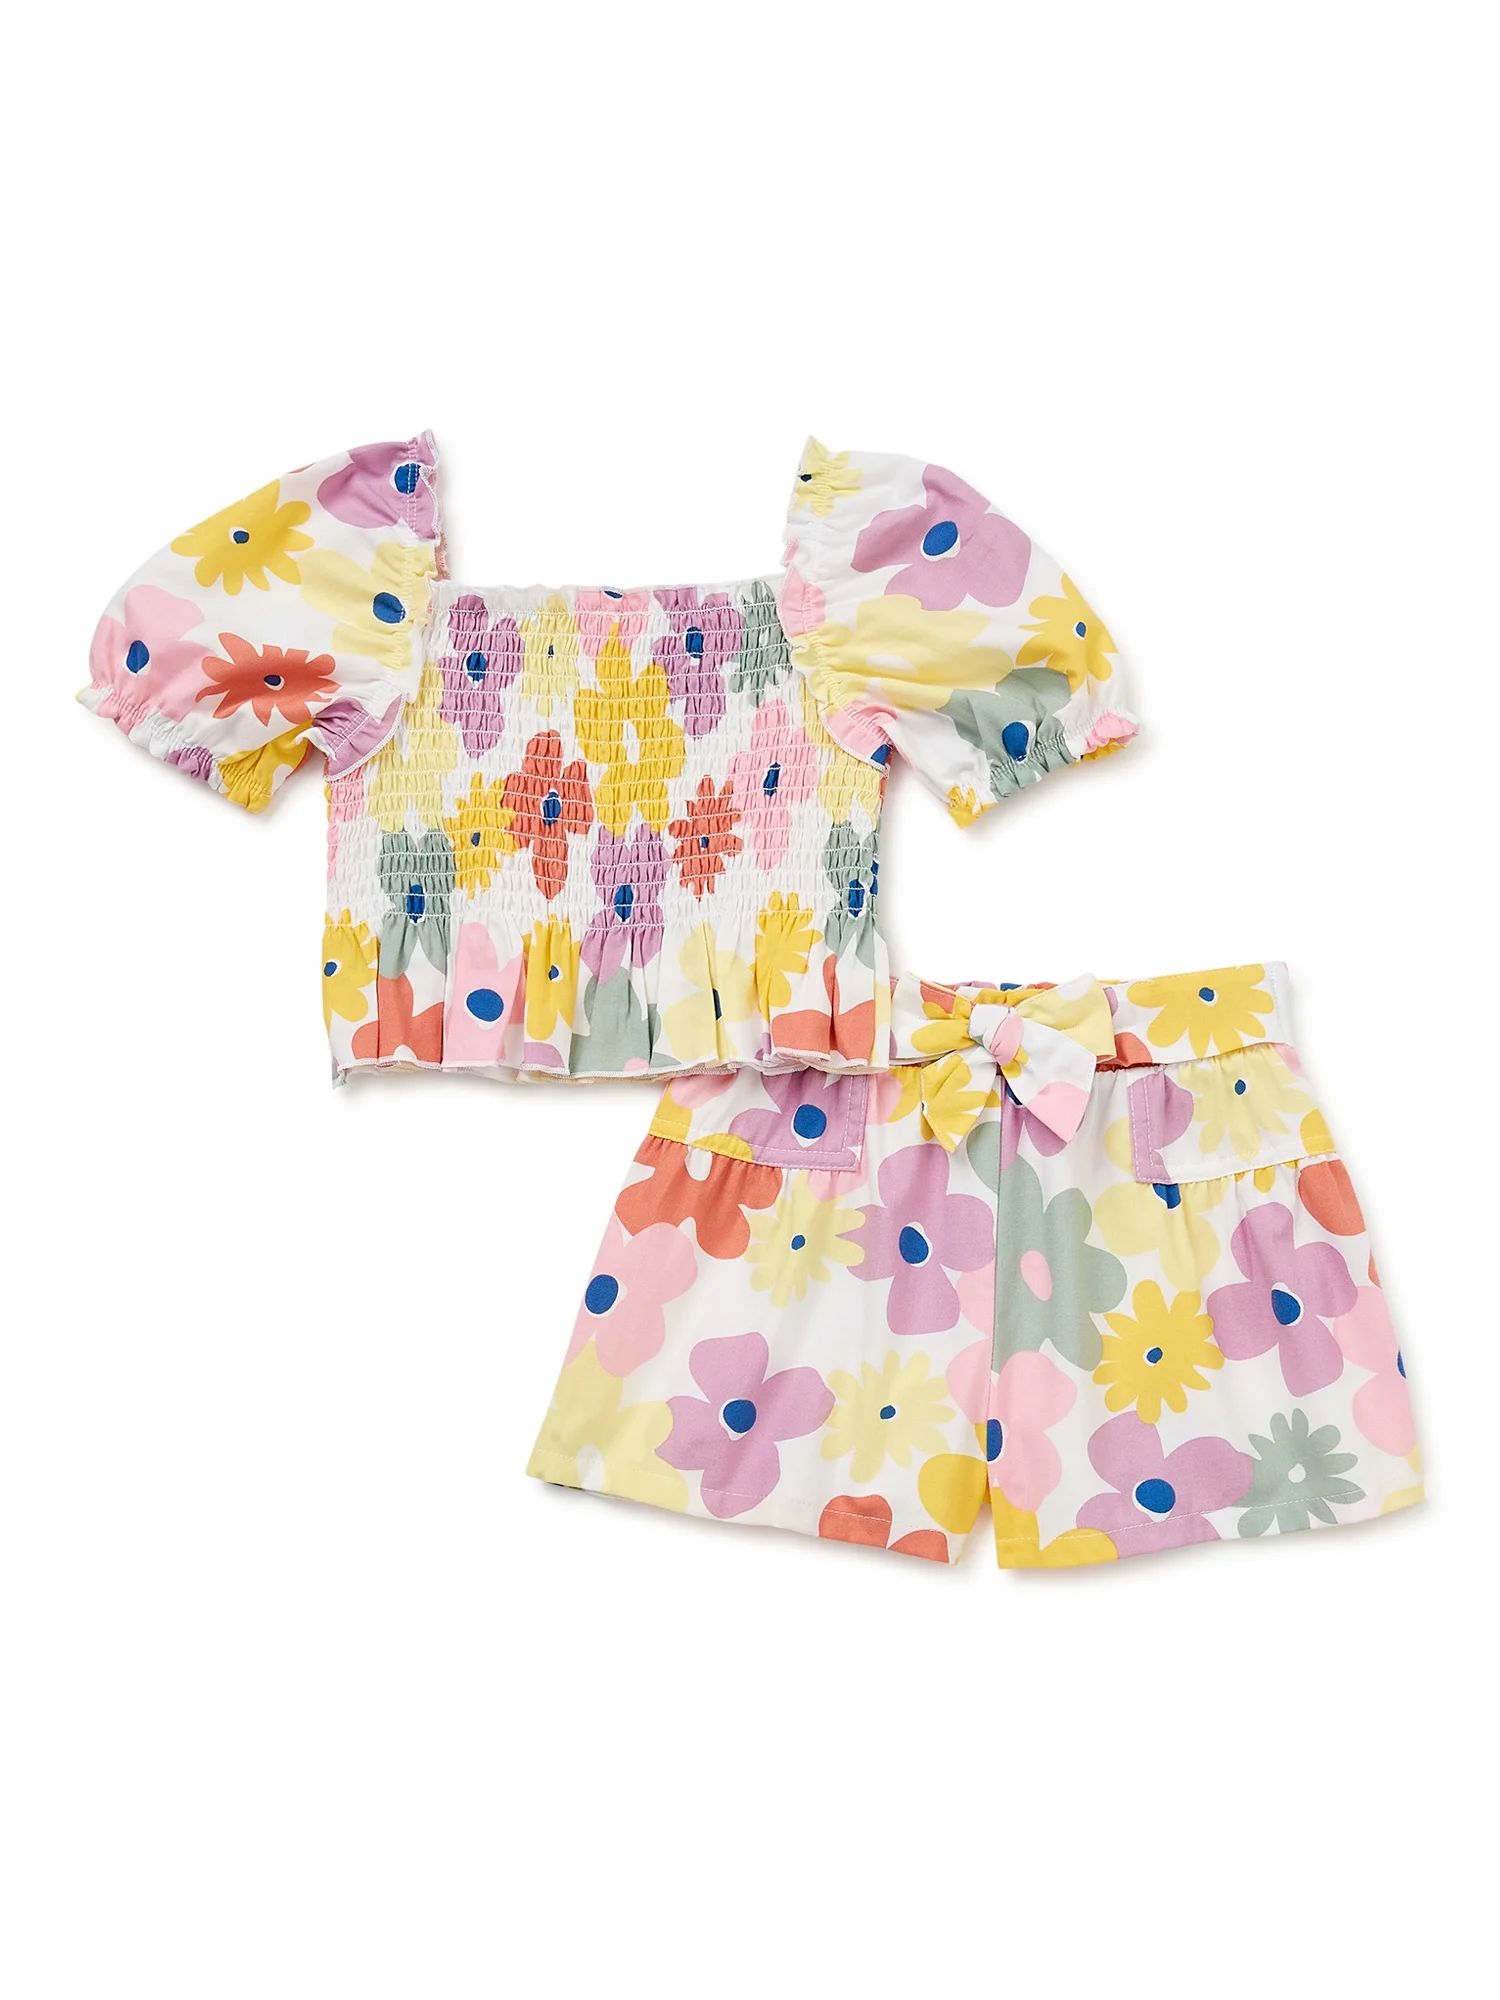 Wonder Nation Baby and Toddler Girls’ Shorts Set, 2-Piece, Sizes 0/3M-5T | Walmart (US)